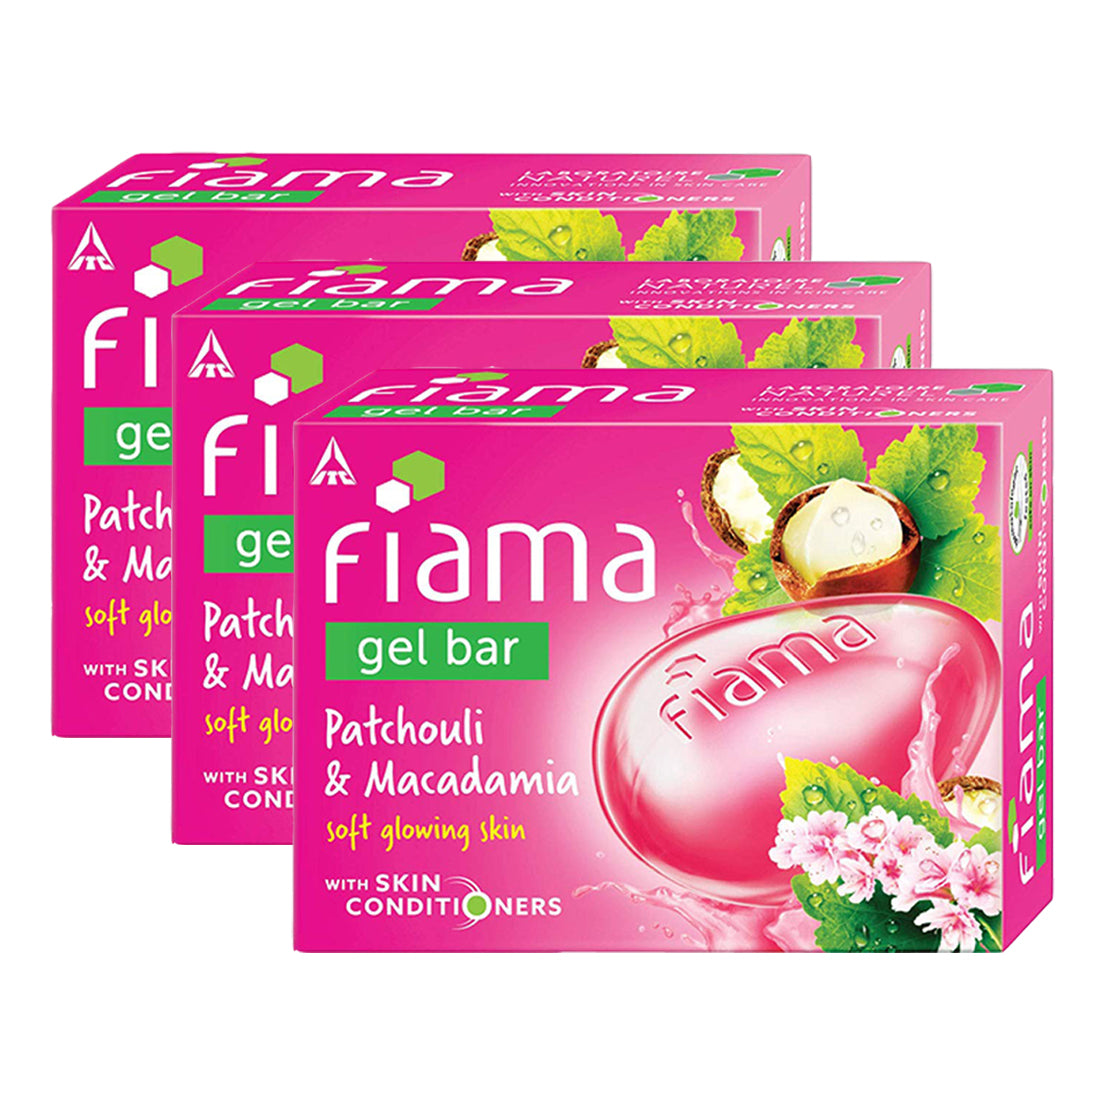 Fiama Gel Bar Patchouli And Macadamia Soft Glowing Skin 125gm Pack Of 3